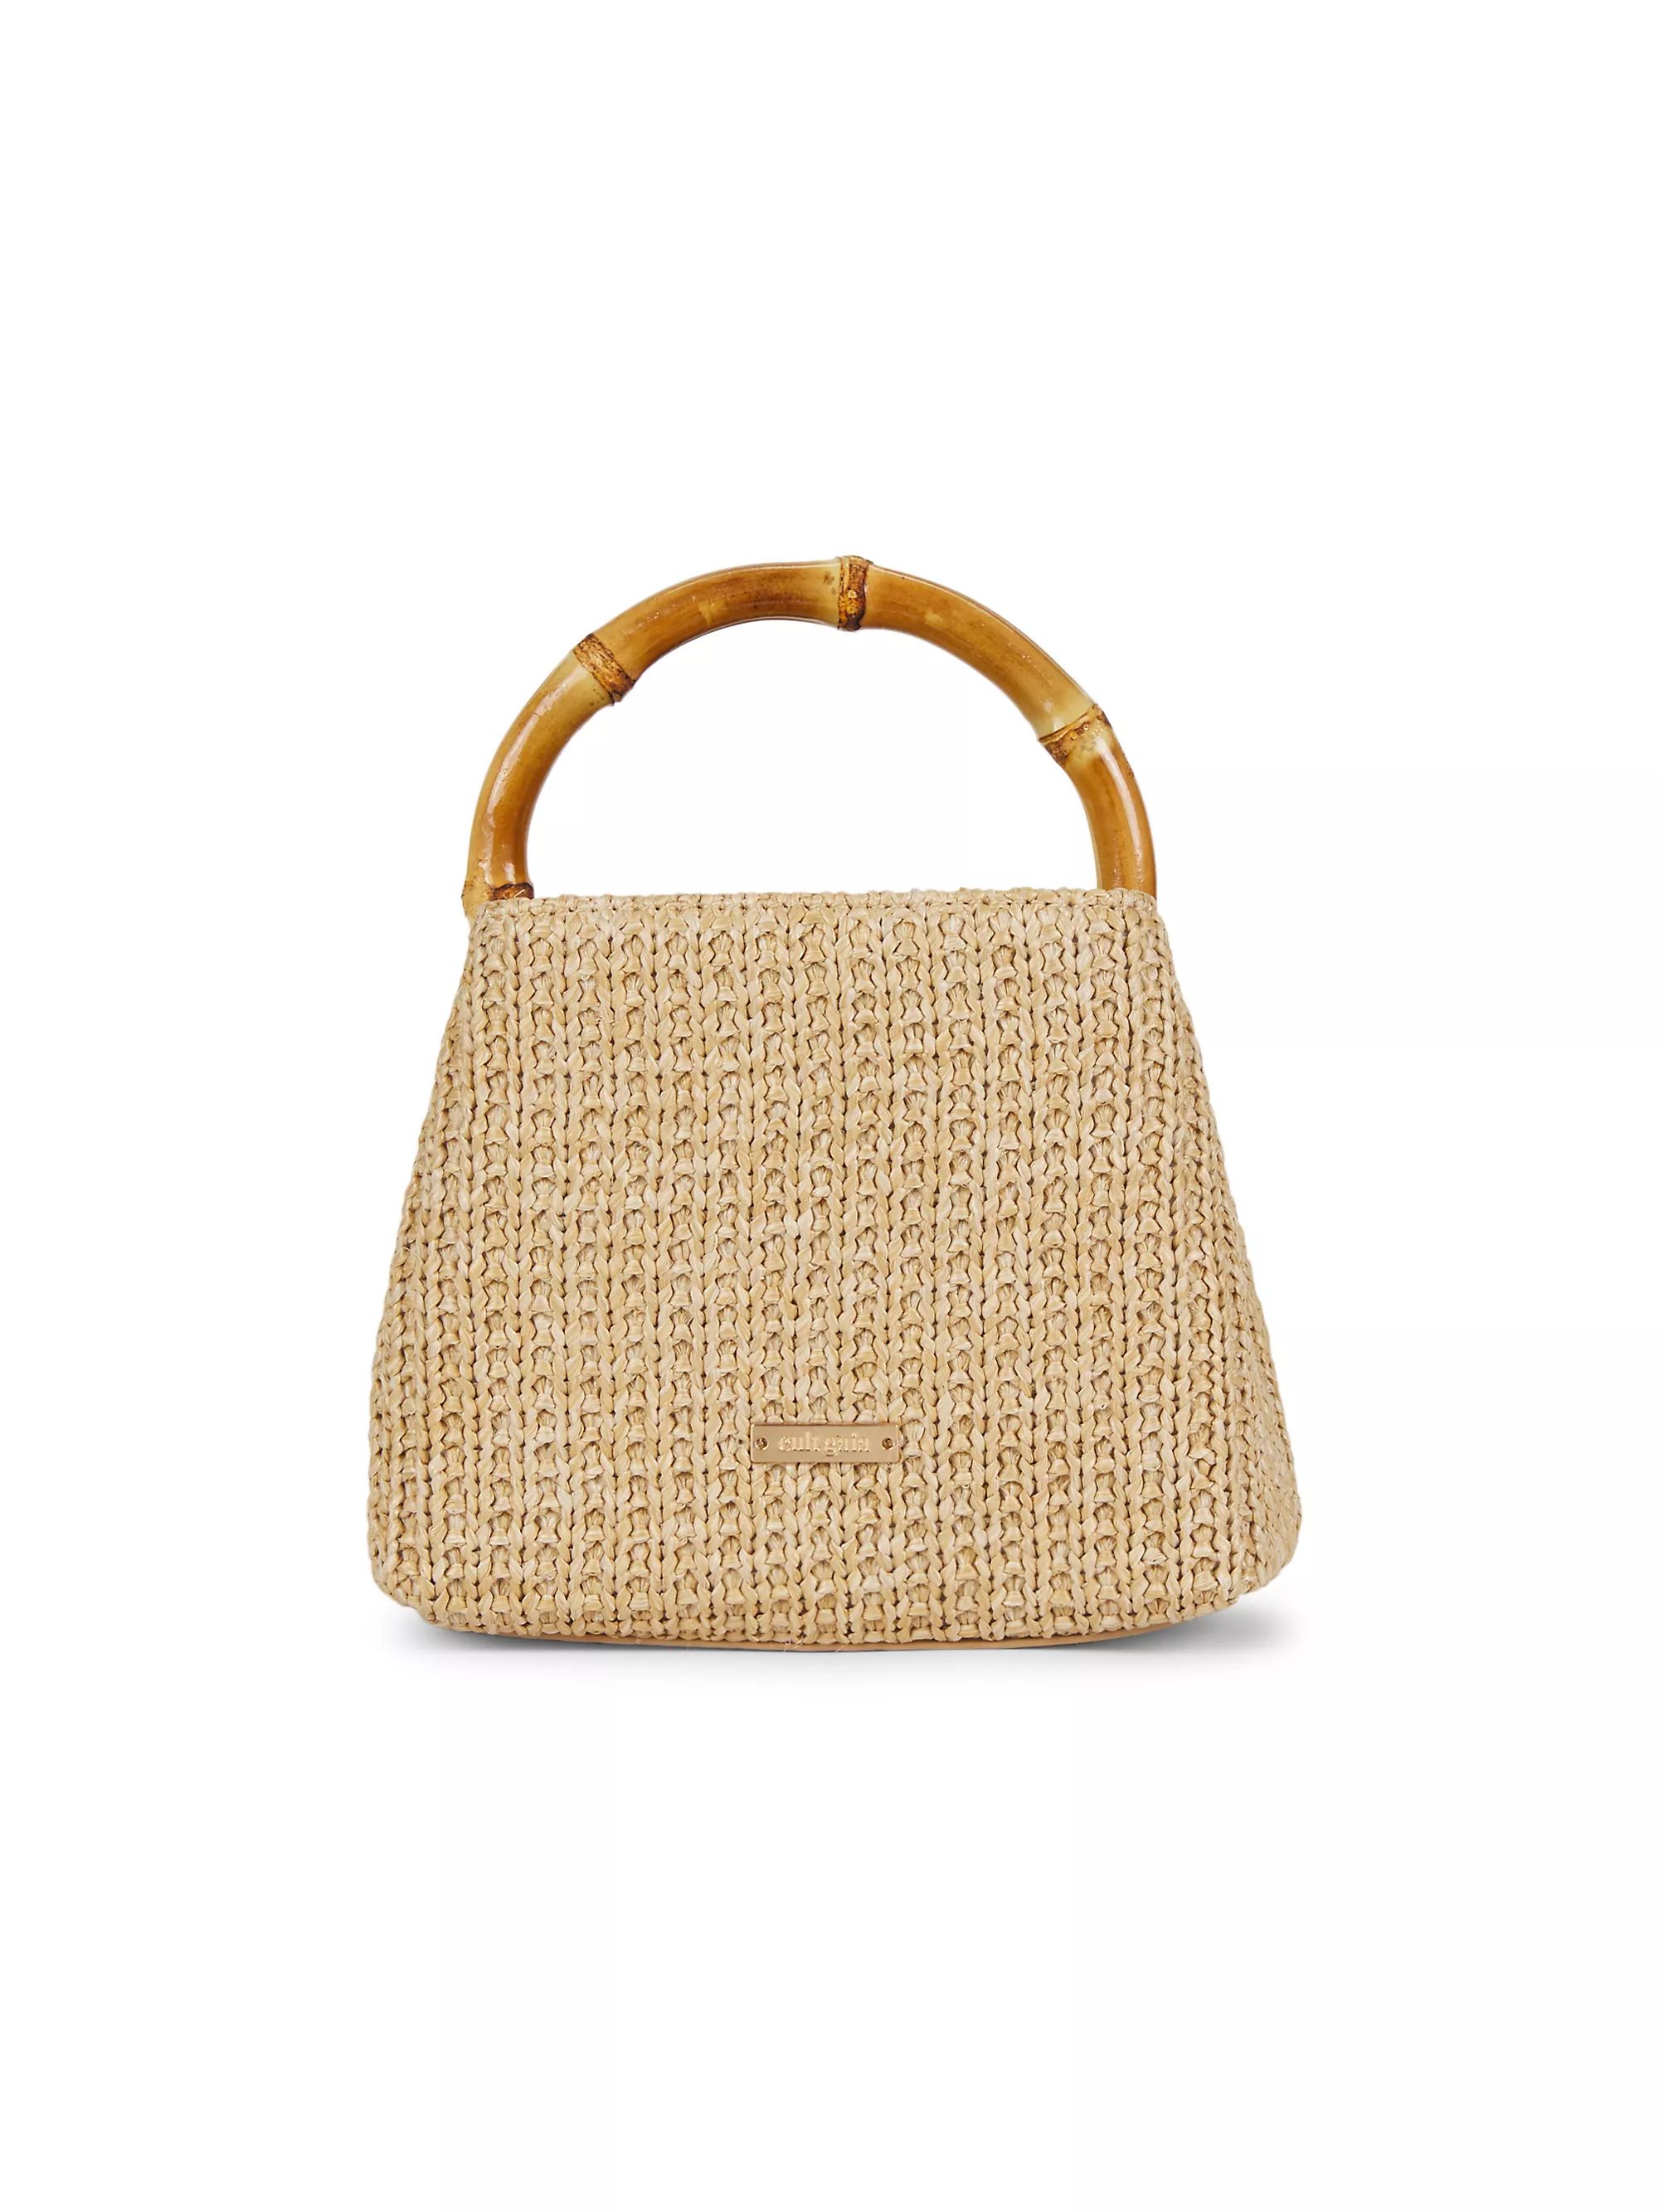 NaturalAll Top Handles & SatchelsCult GaiaSolene Mini Cotton Crossbody Bag$298Free Shipping on $2... | Saks Fifth Avenue